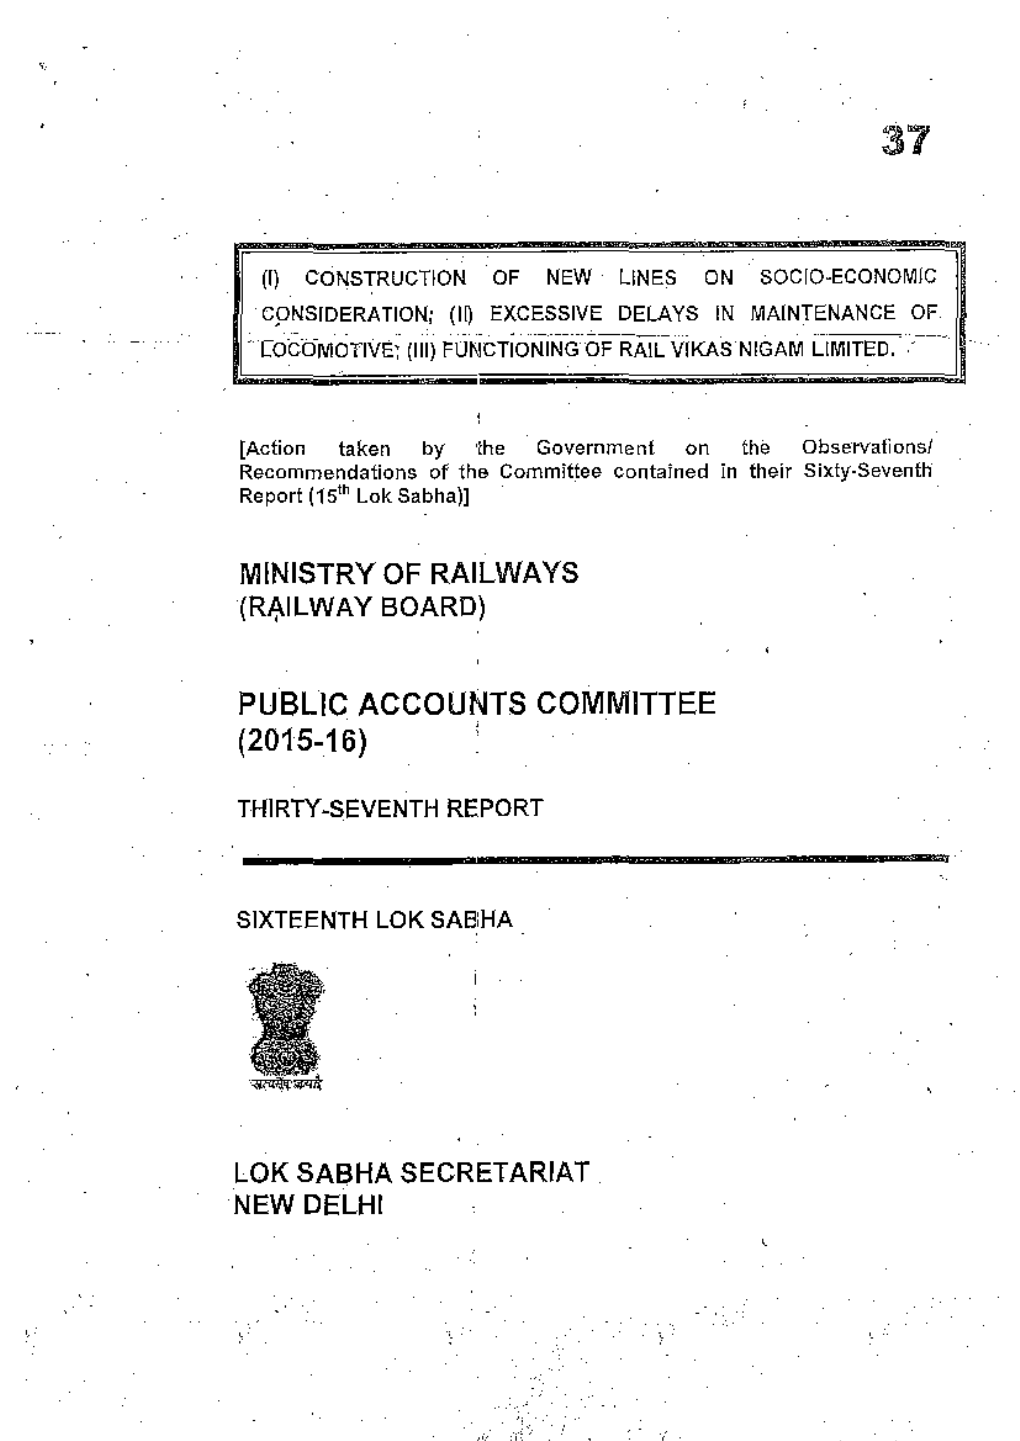 MINISTRY of RAILWAYS (Rl)ILWAY BOARD) PUBLIC ACCOUNTS COMMITTEE LOK SABHA SECRETARIAT NEW DELHI